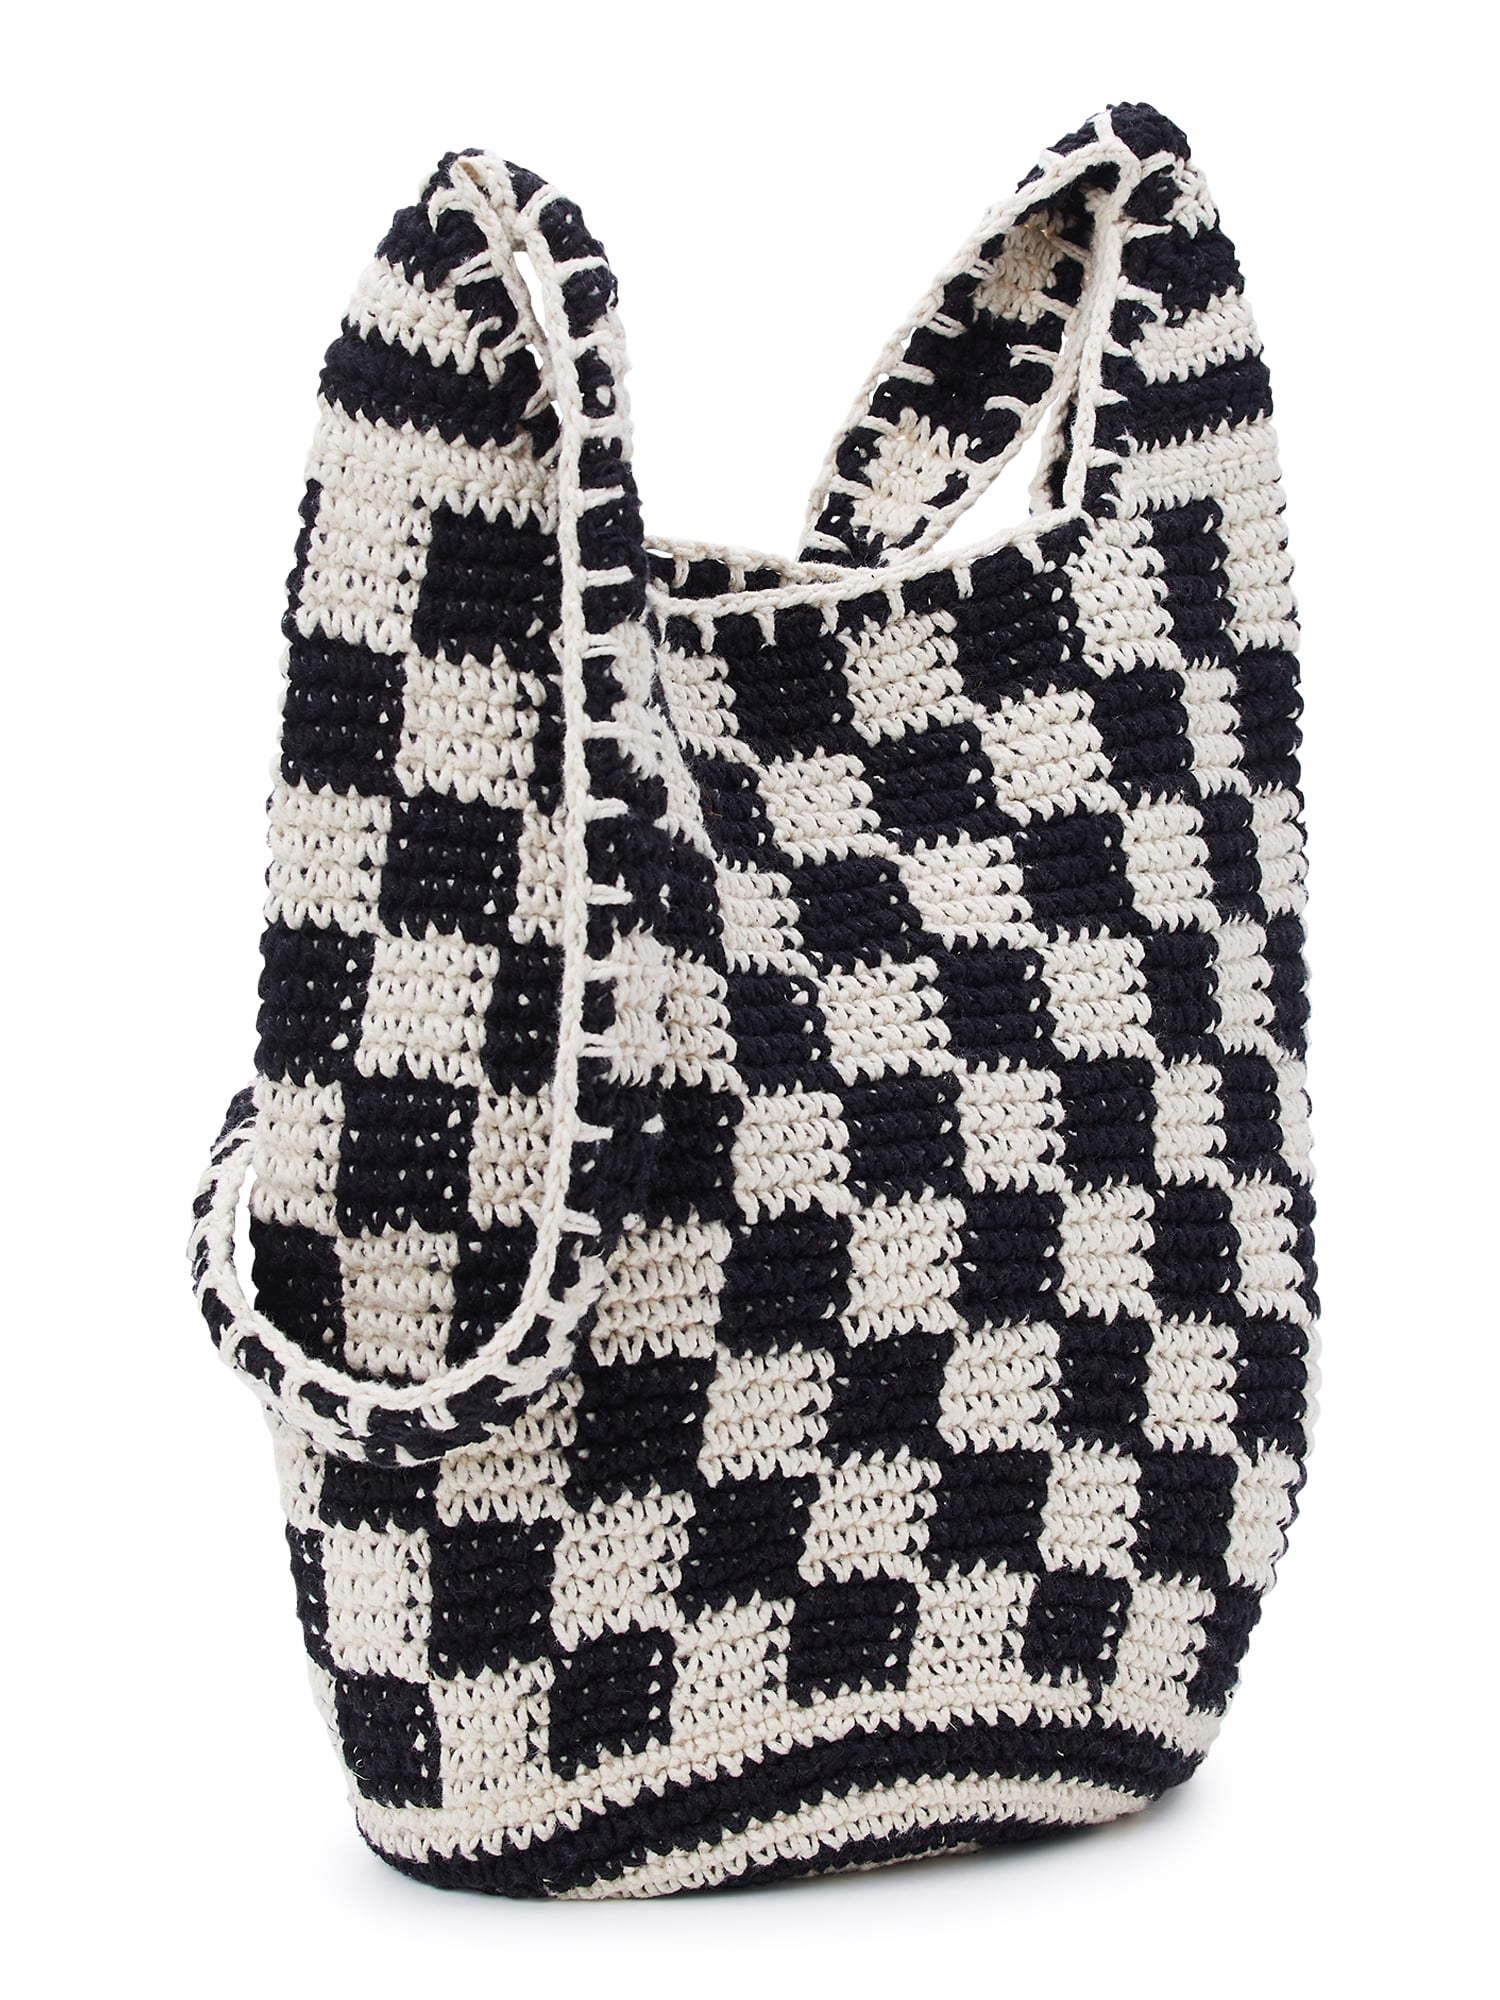 No Boundaries Women's Festival Crochet Tote Bag Tan Multi Stripe